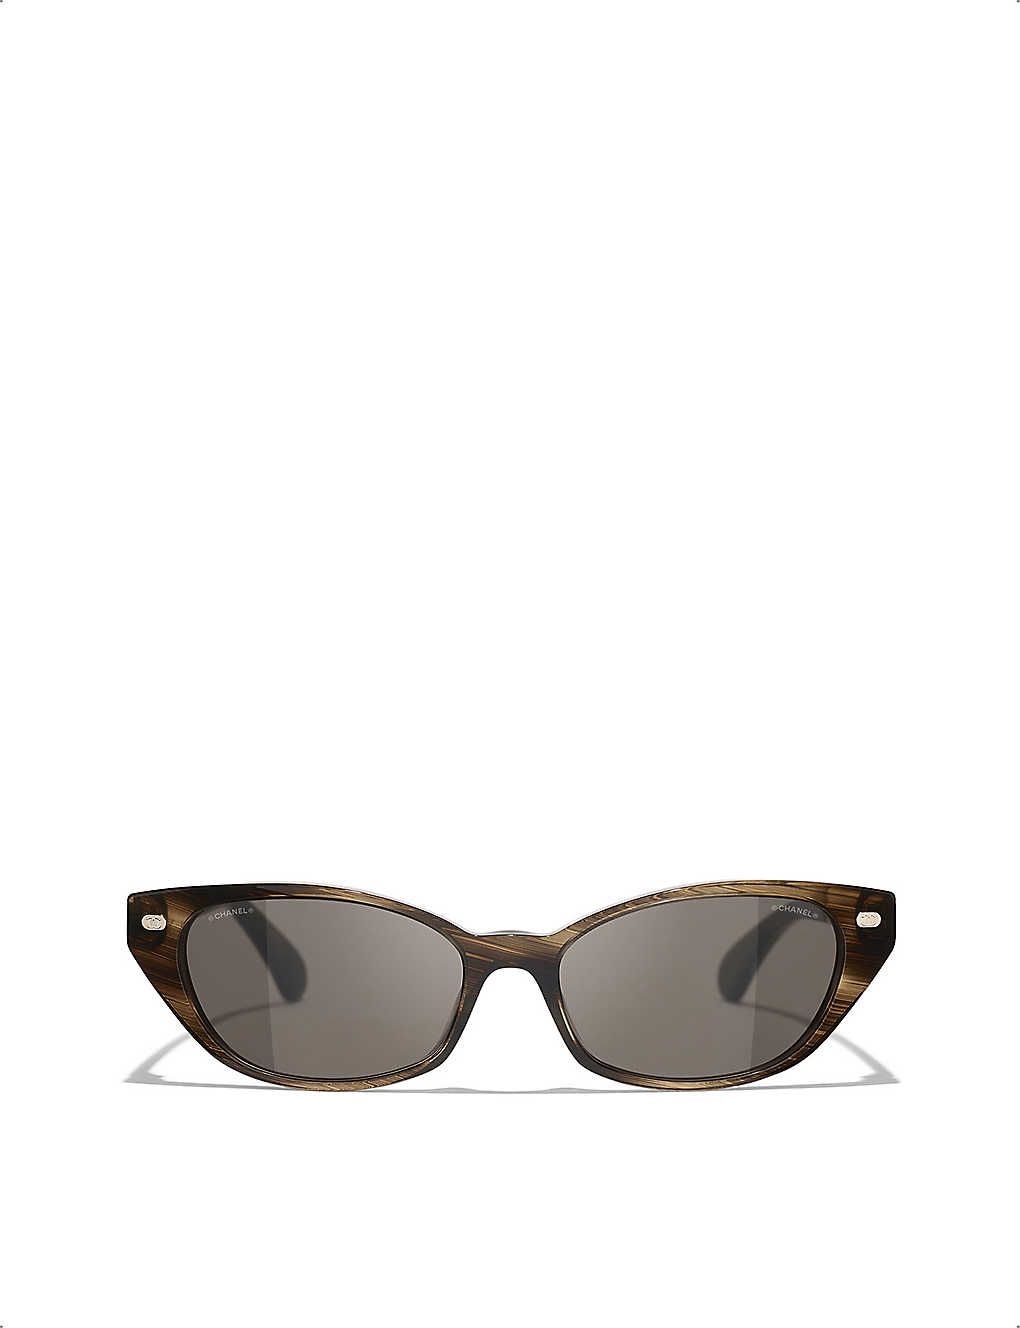 Cat-eye sunglasses | Selfridges